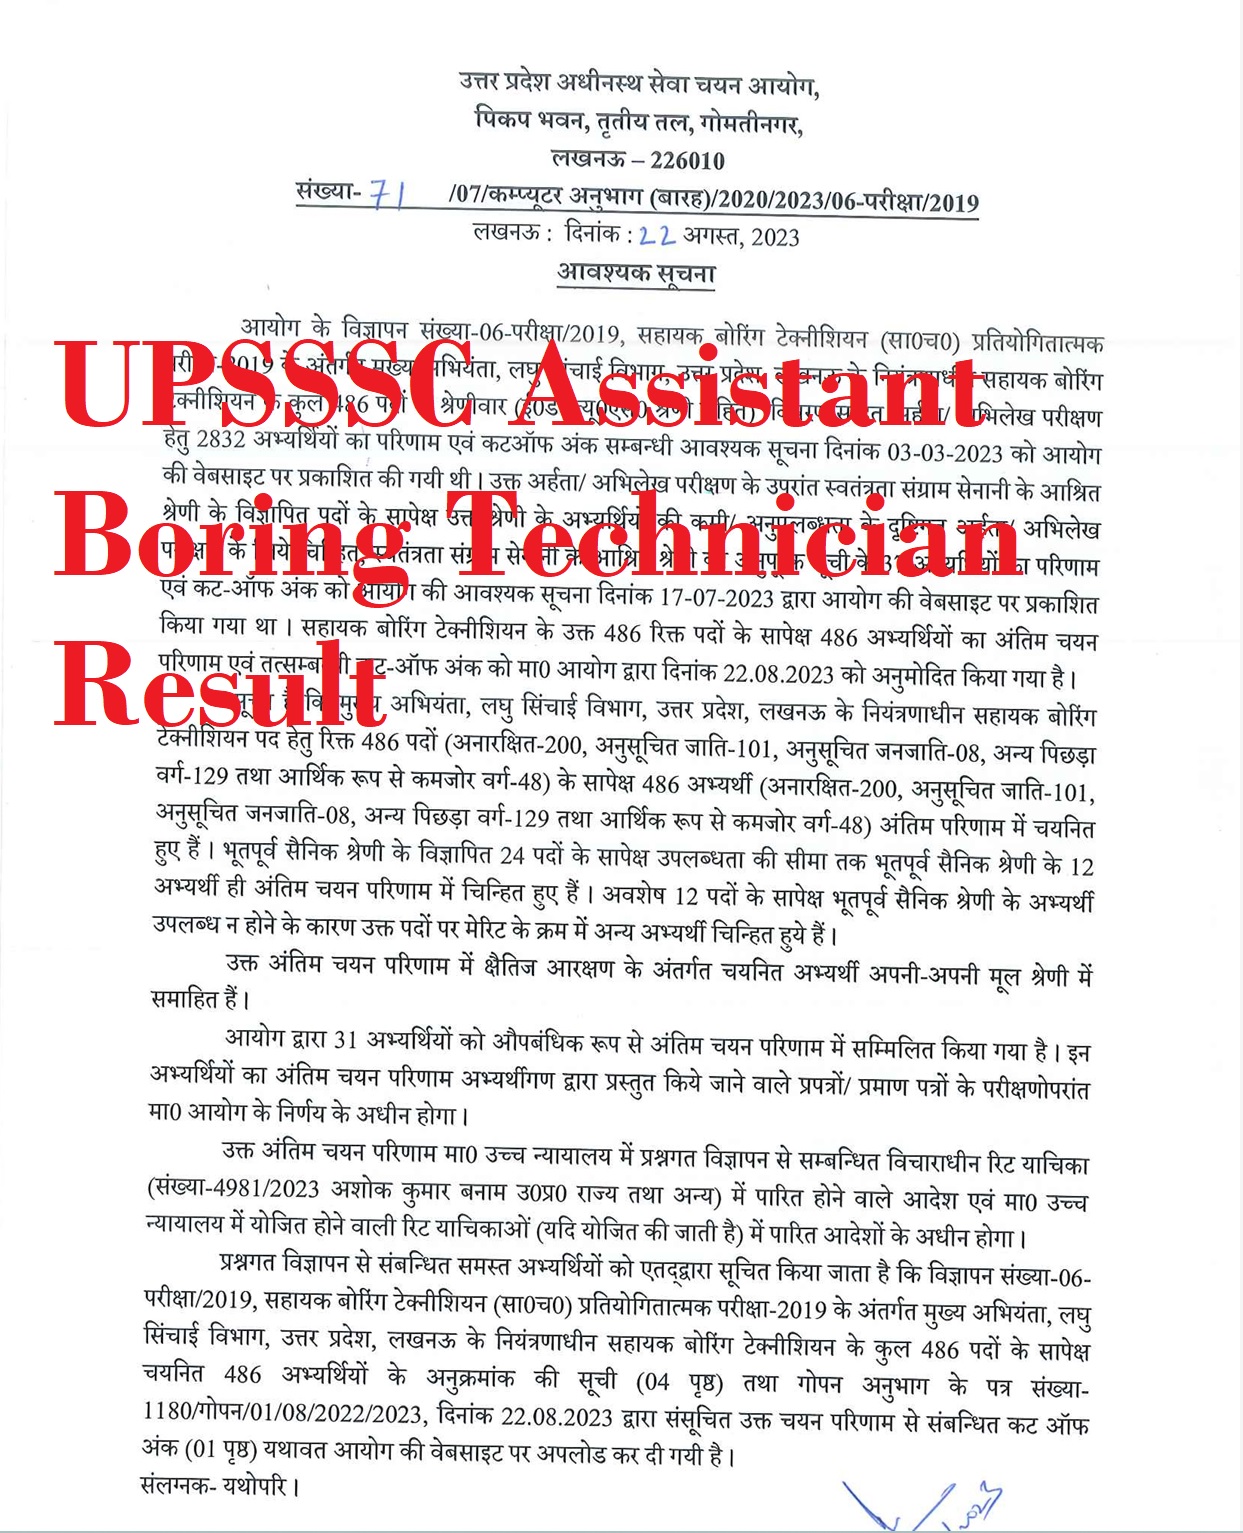 UPSSSC Assistant Boring Technician Result